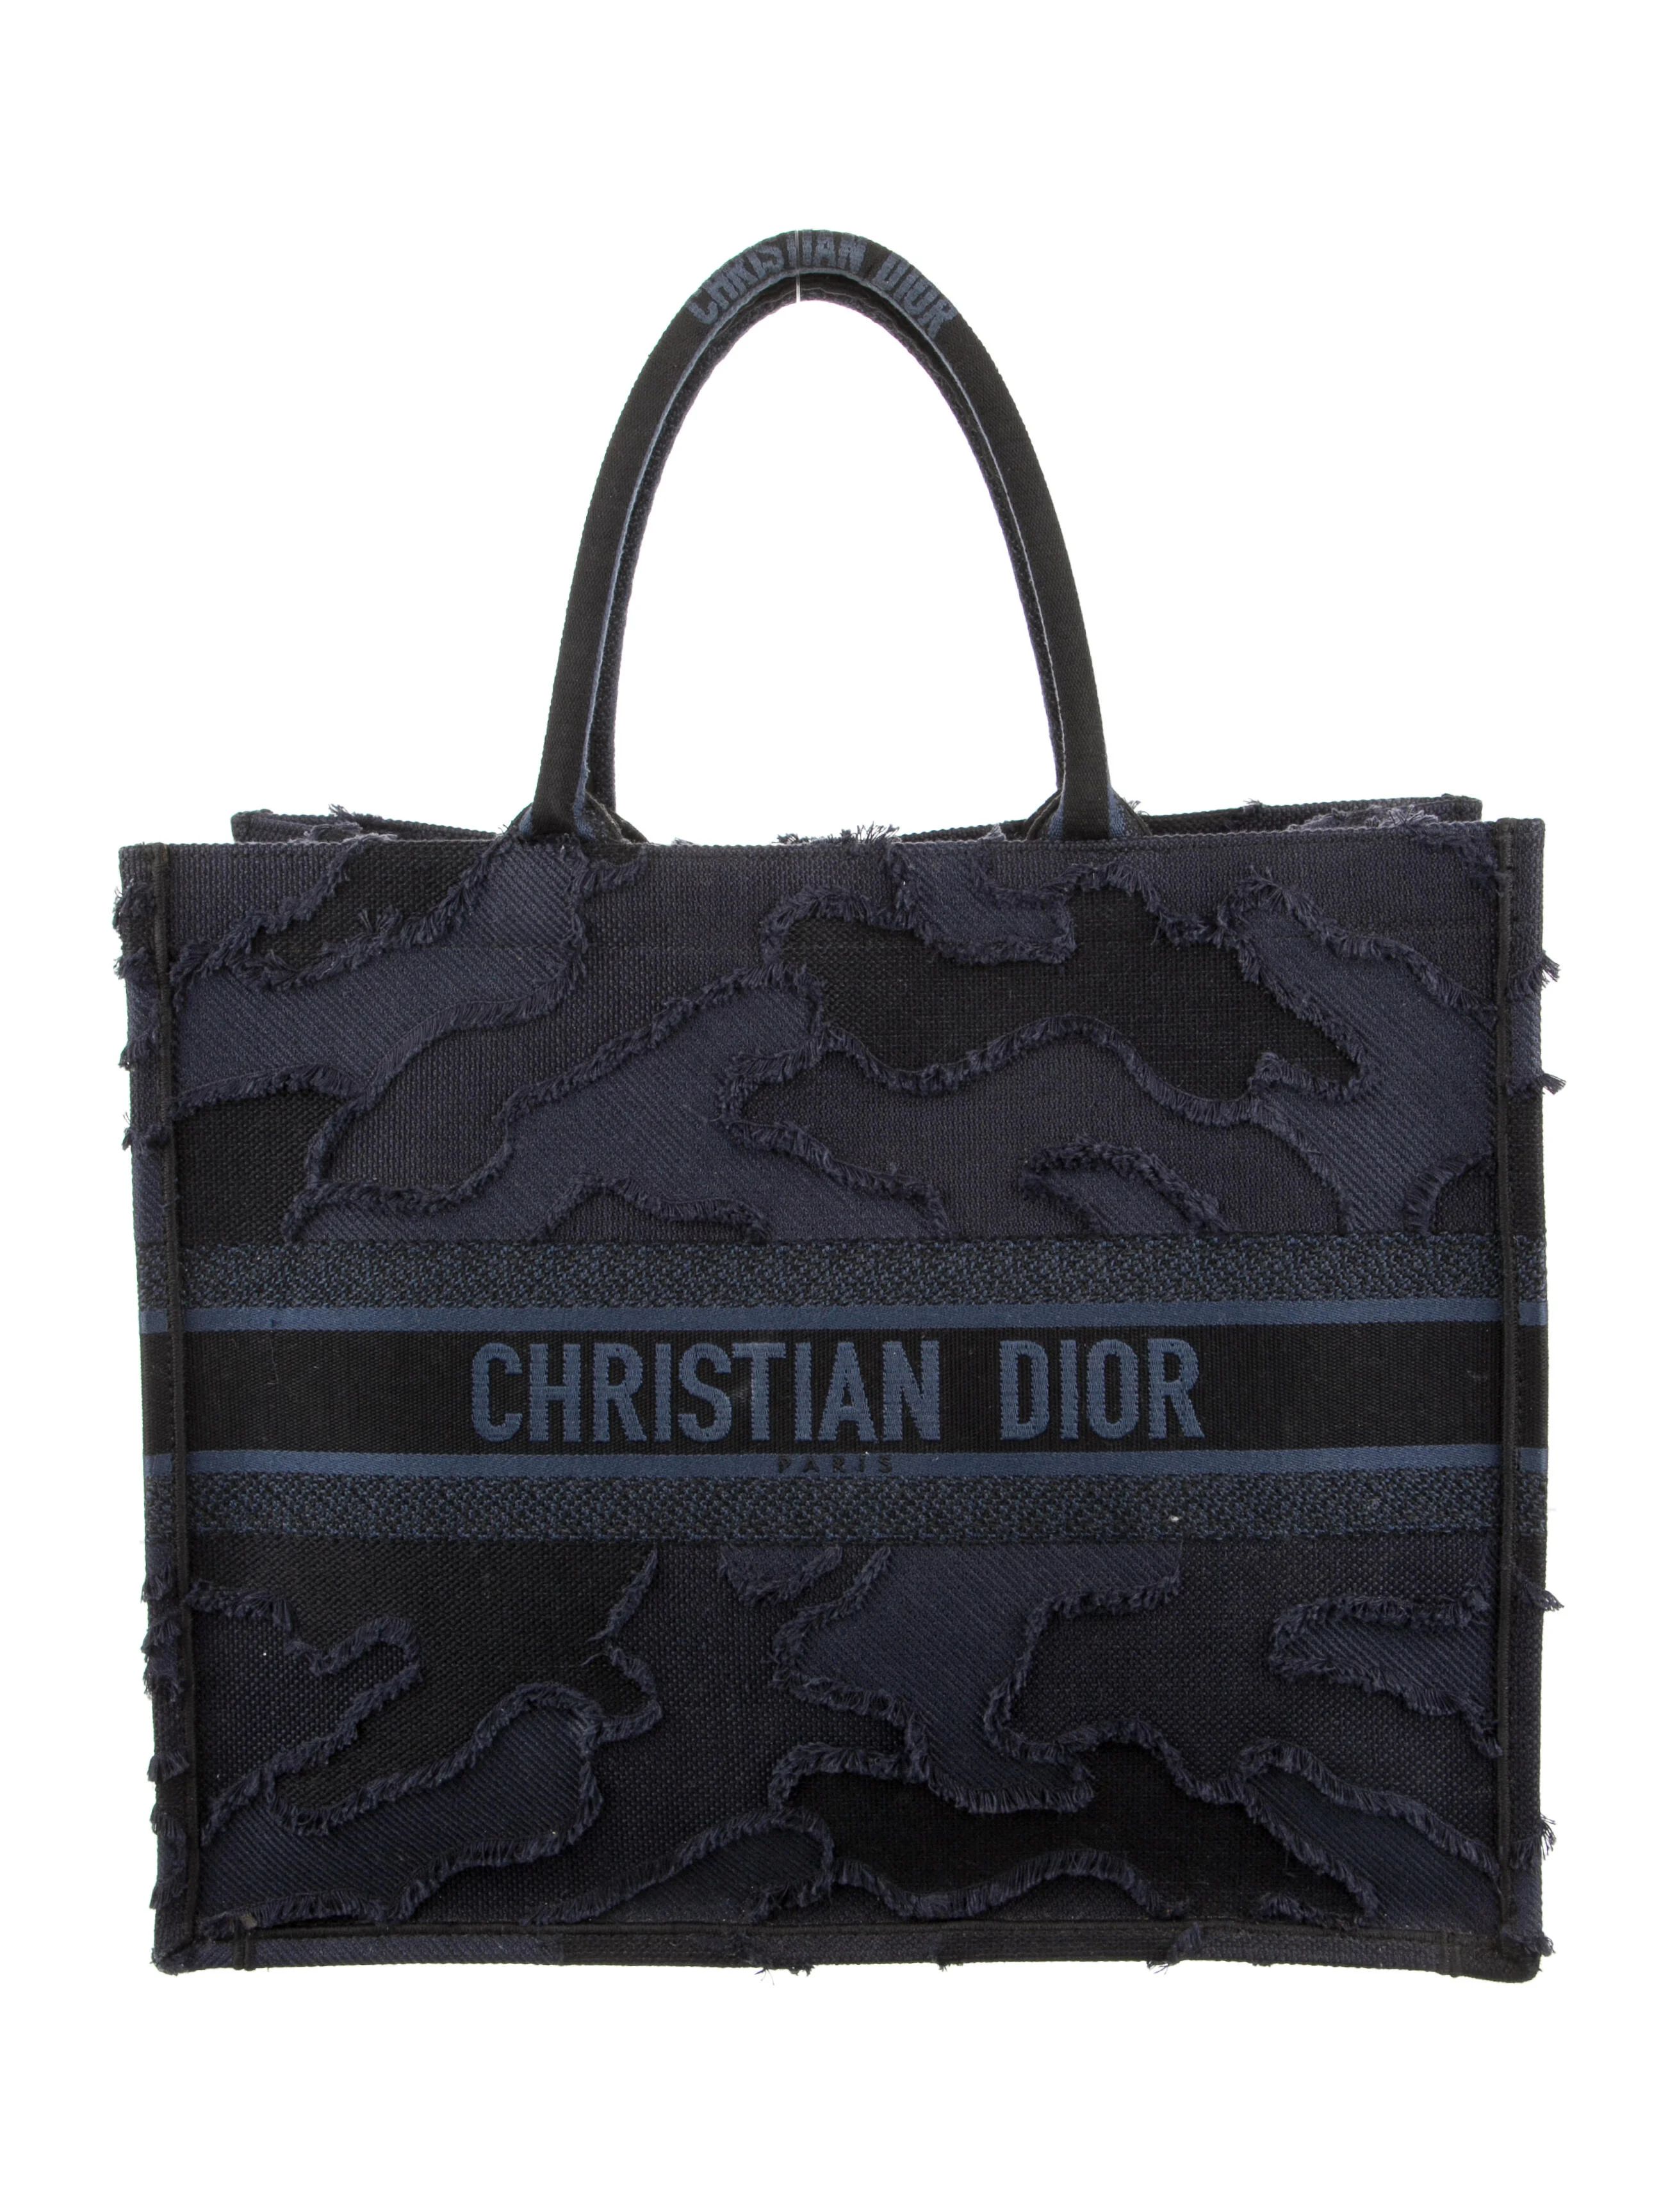 Christian Dior | The RealReal